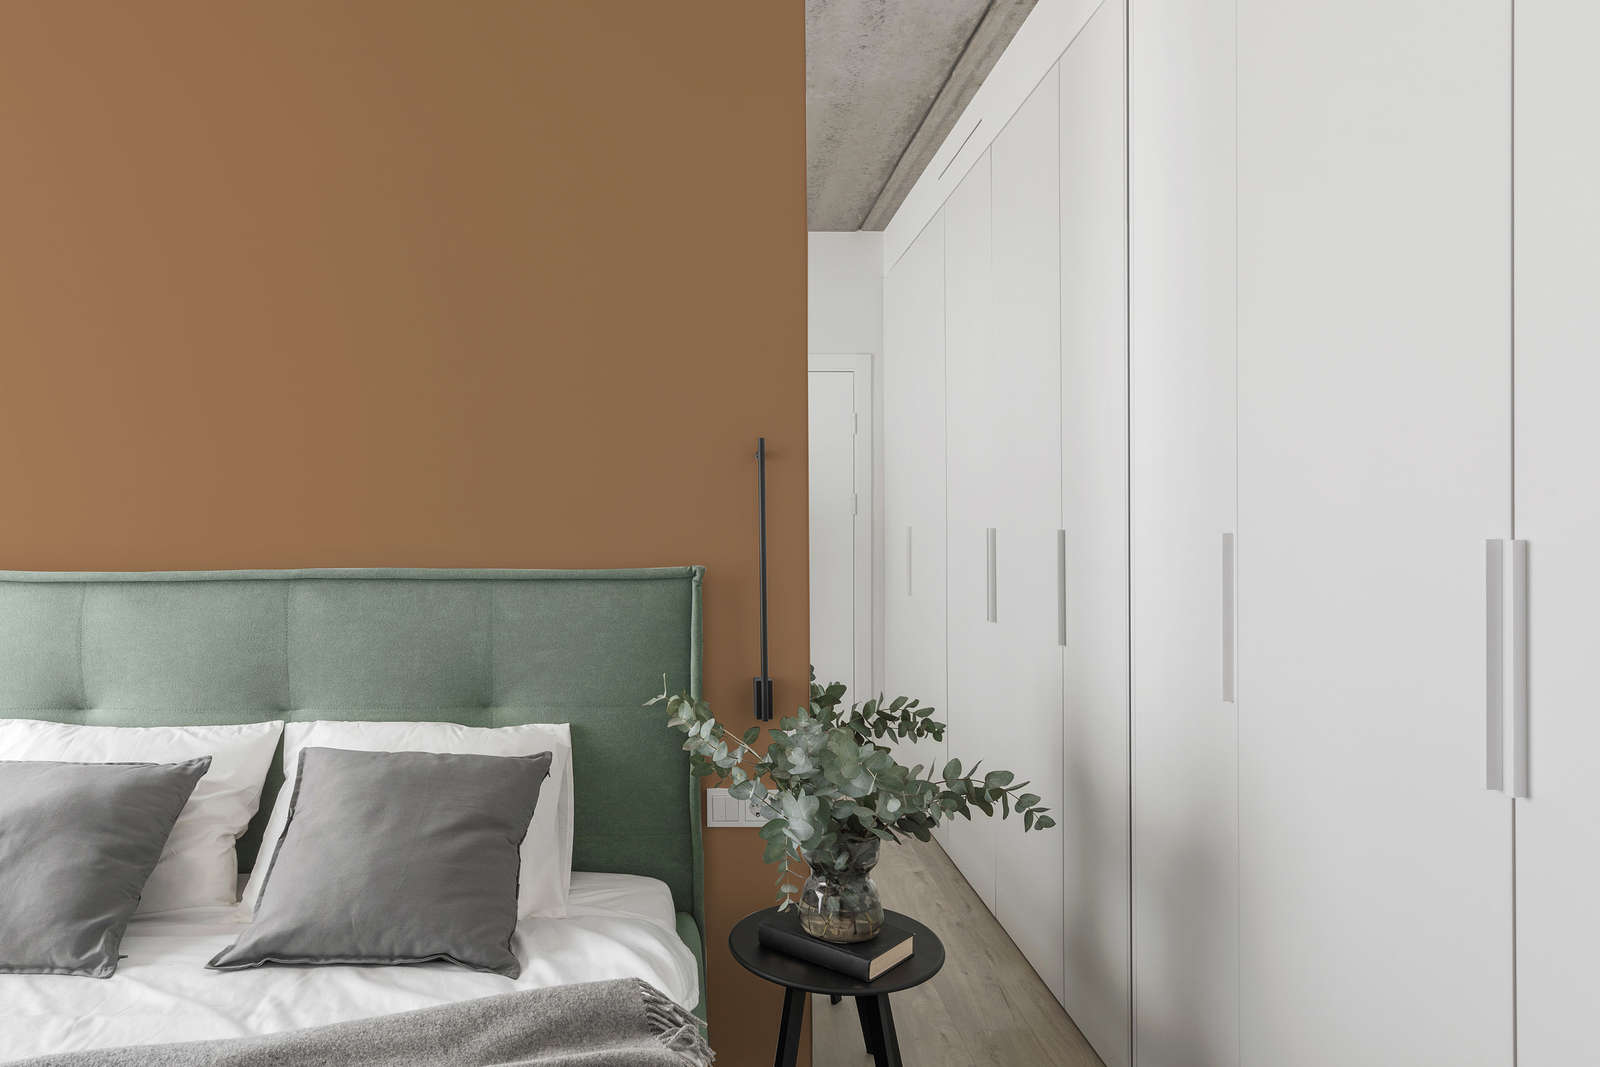             Premium Wall Paint Sensitive Golden Brown »Boho Beige« NW728 – 5 litre
        